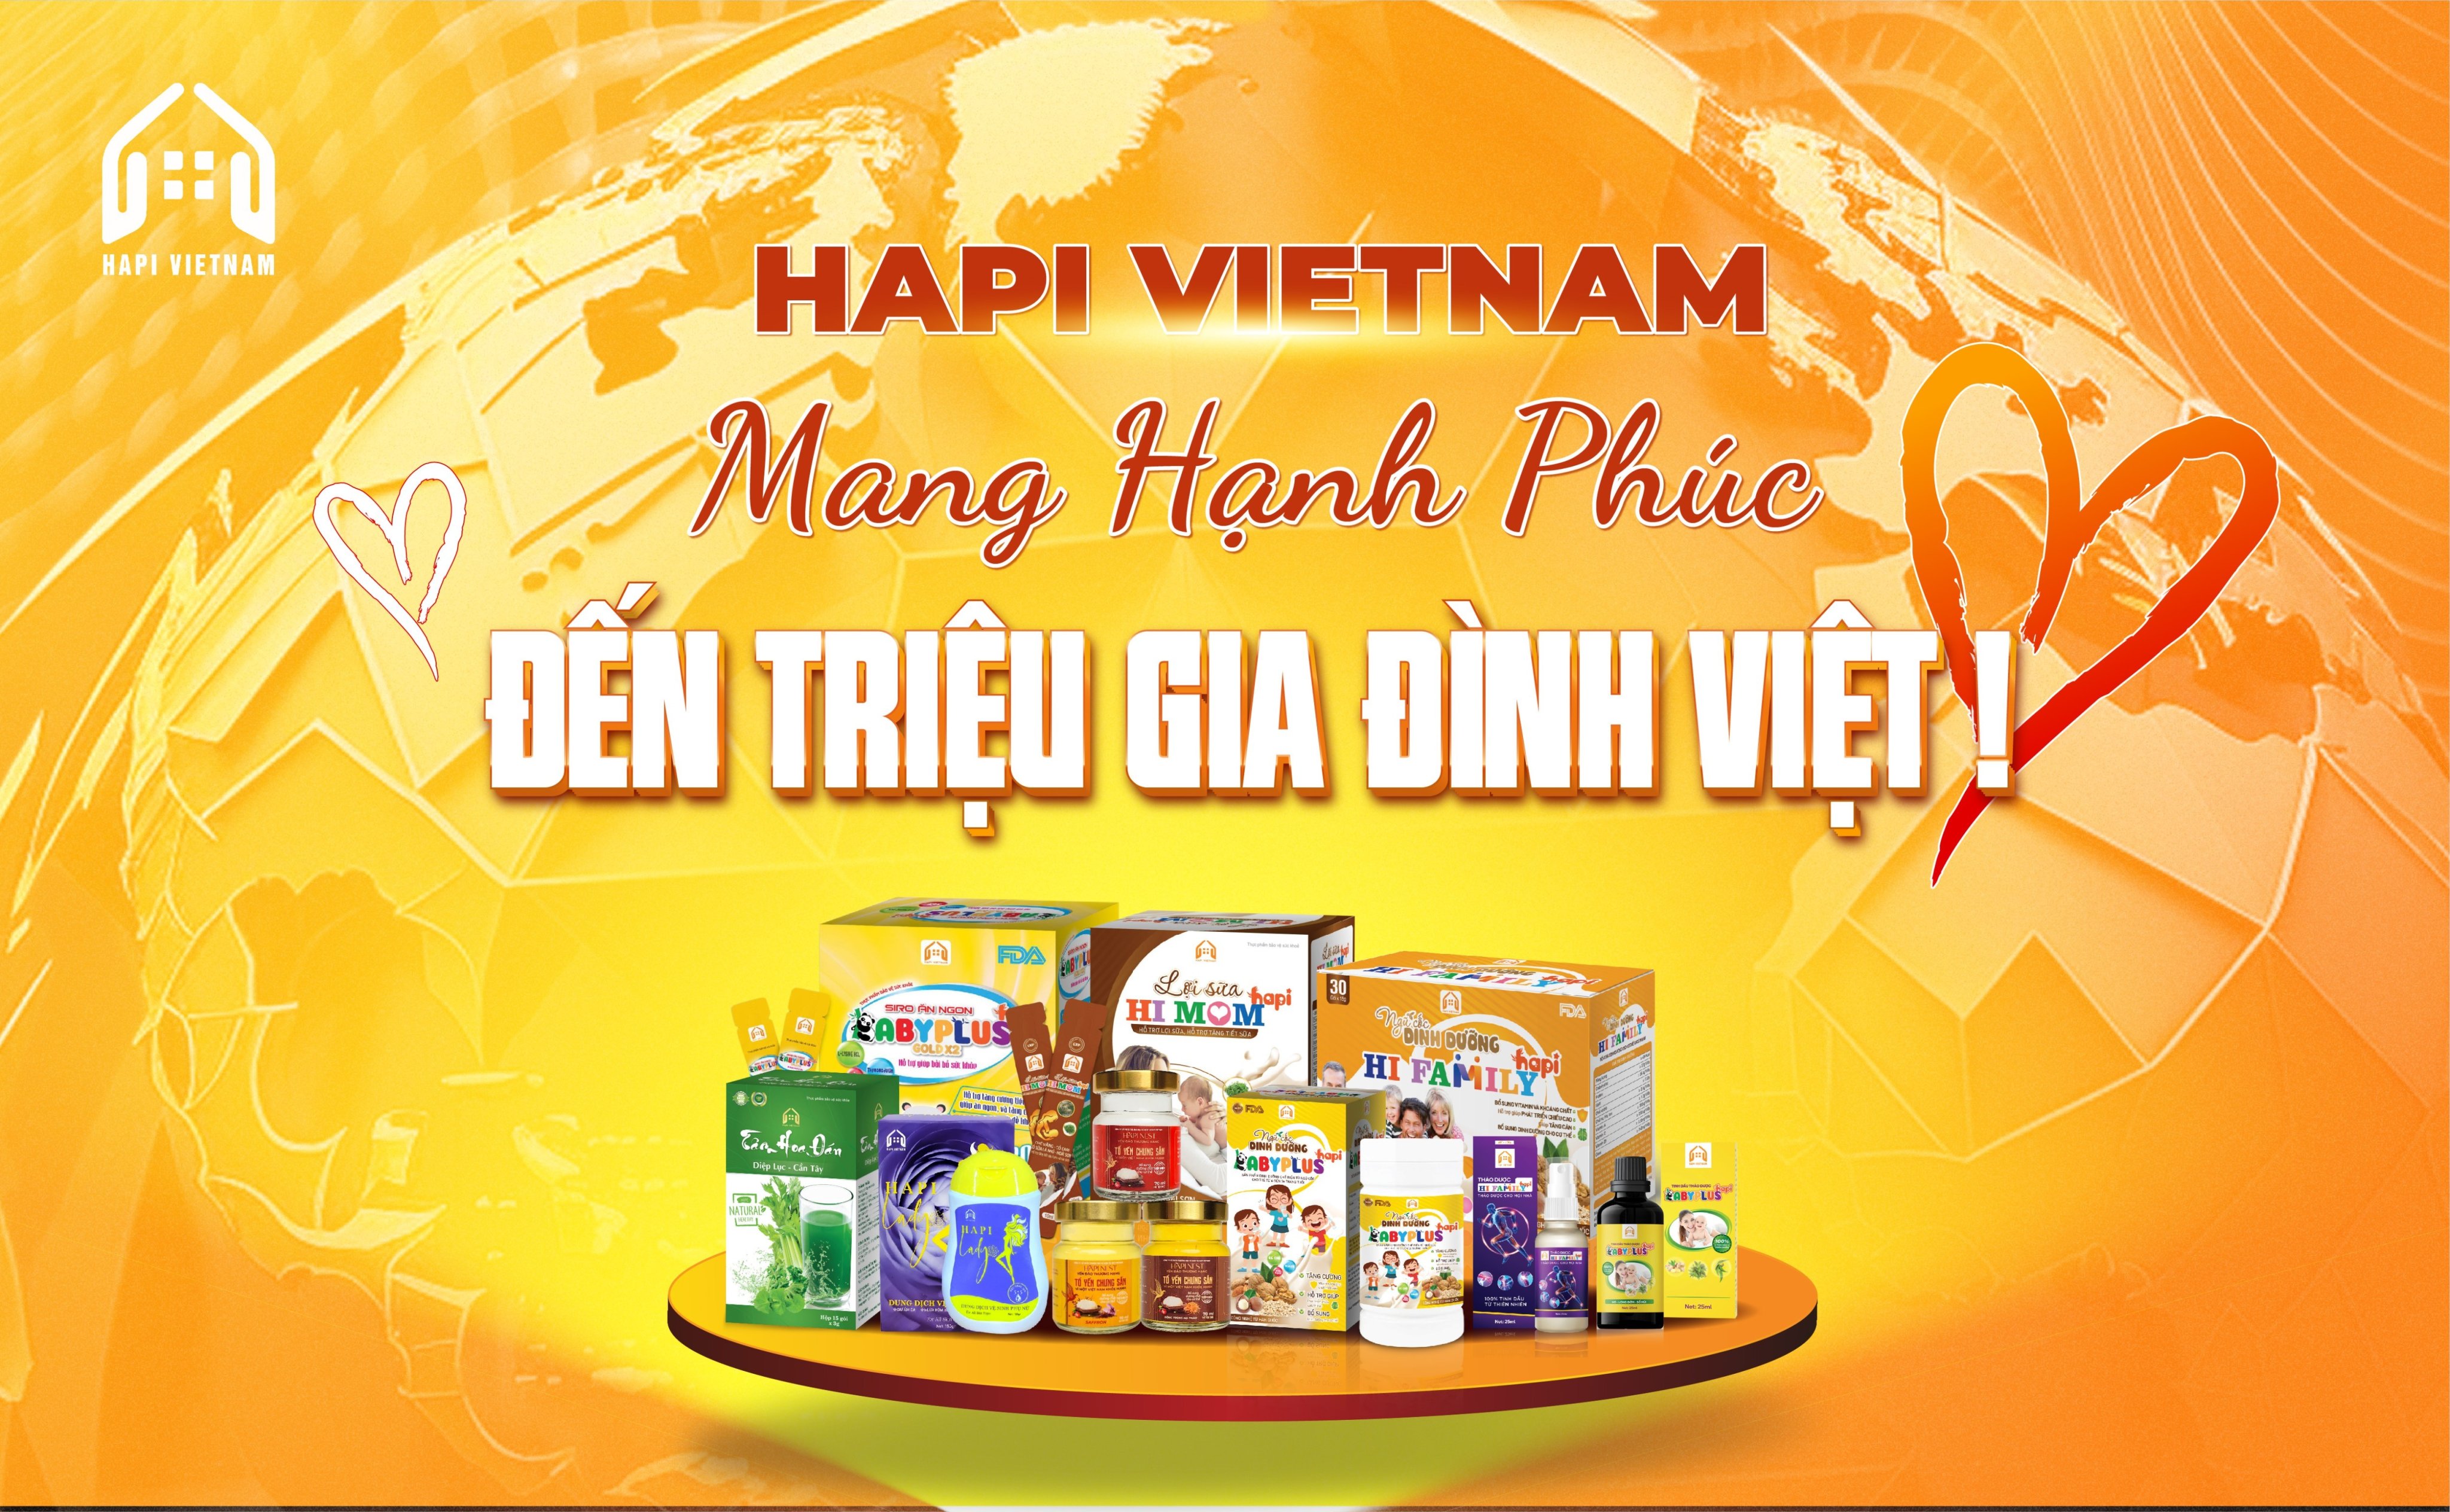 Hapi Vietnam